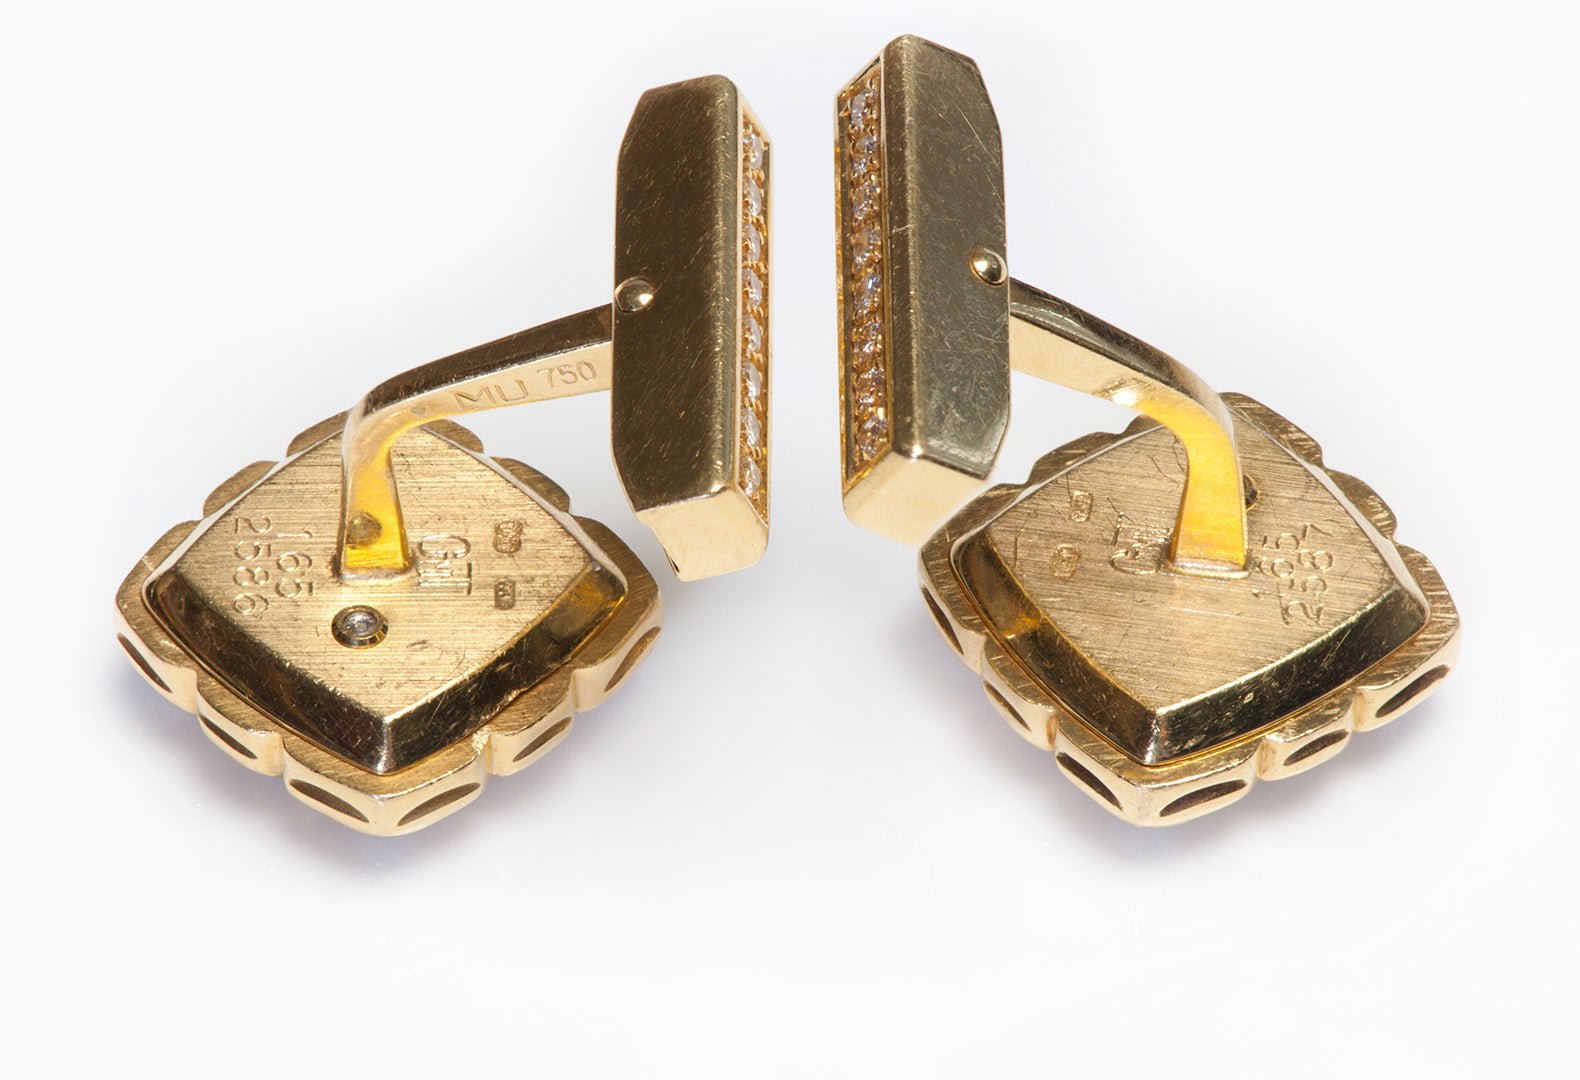 Fred Paris 18K Gold Diamond Watch Cufflinks